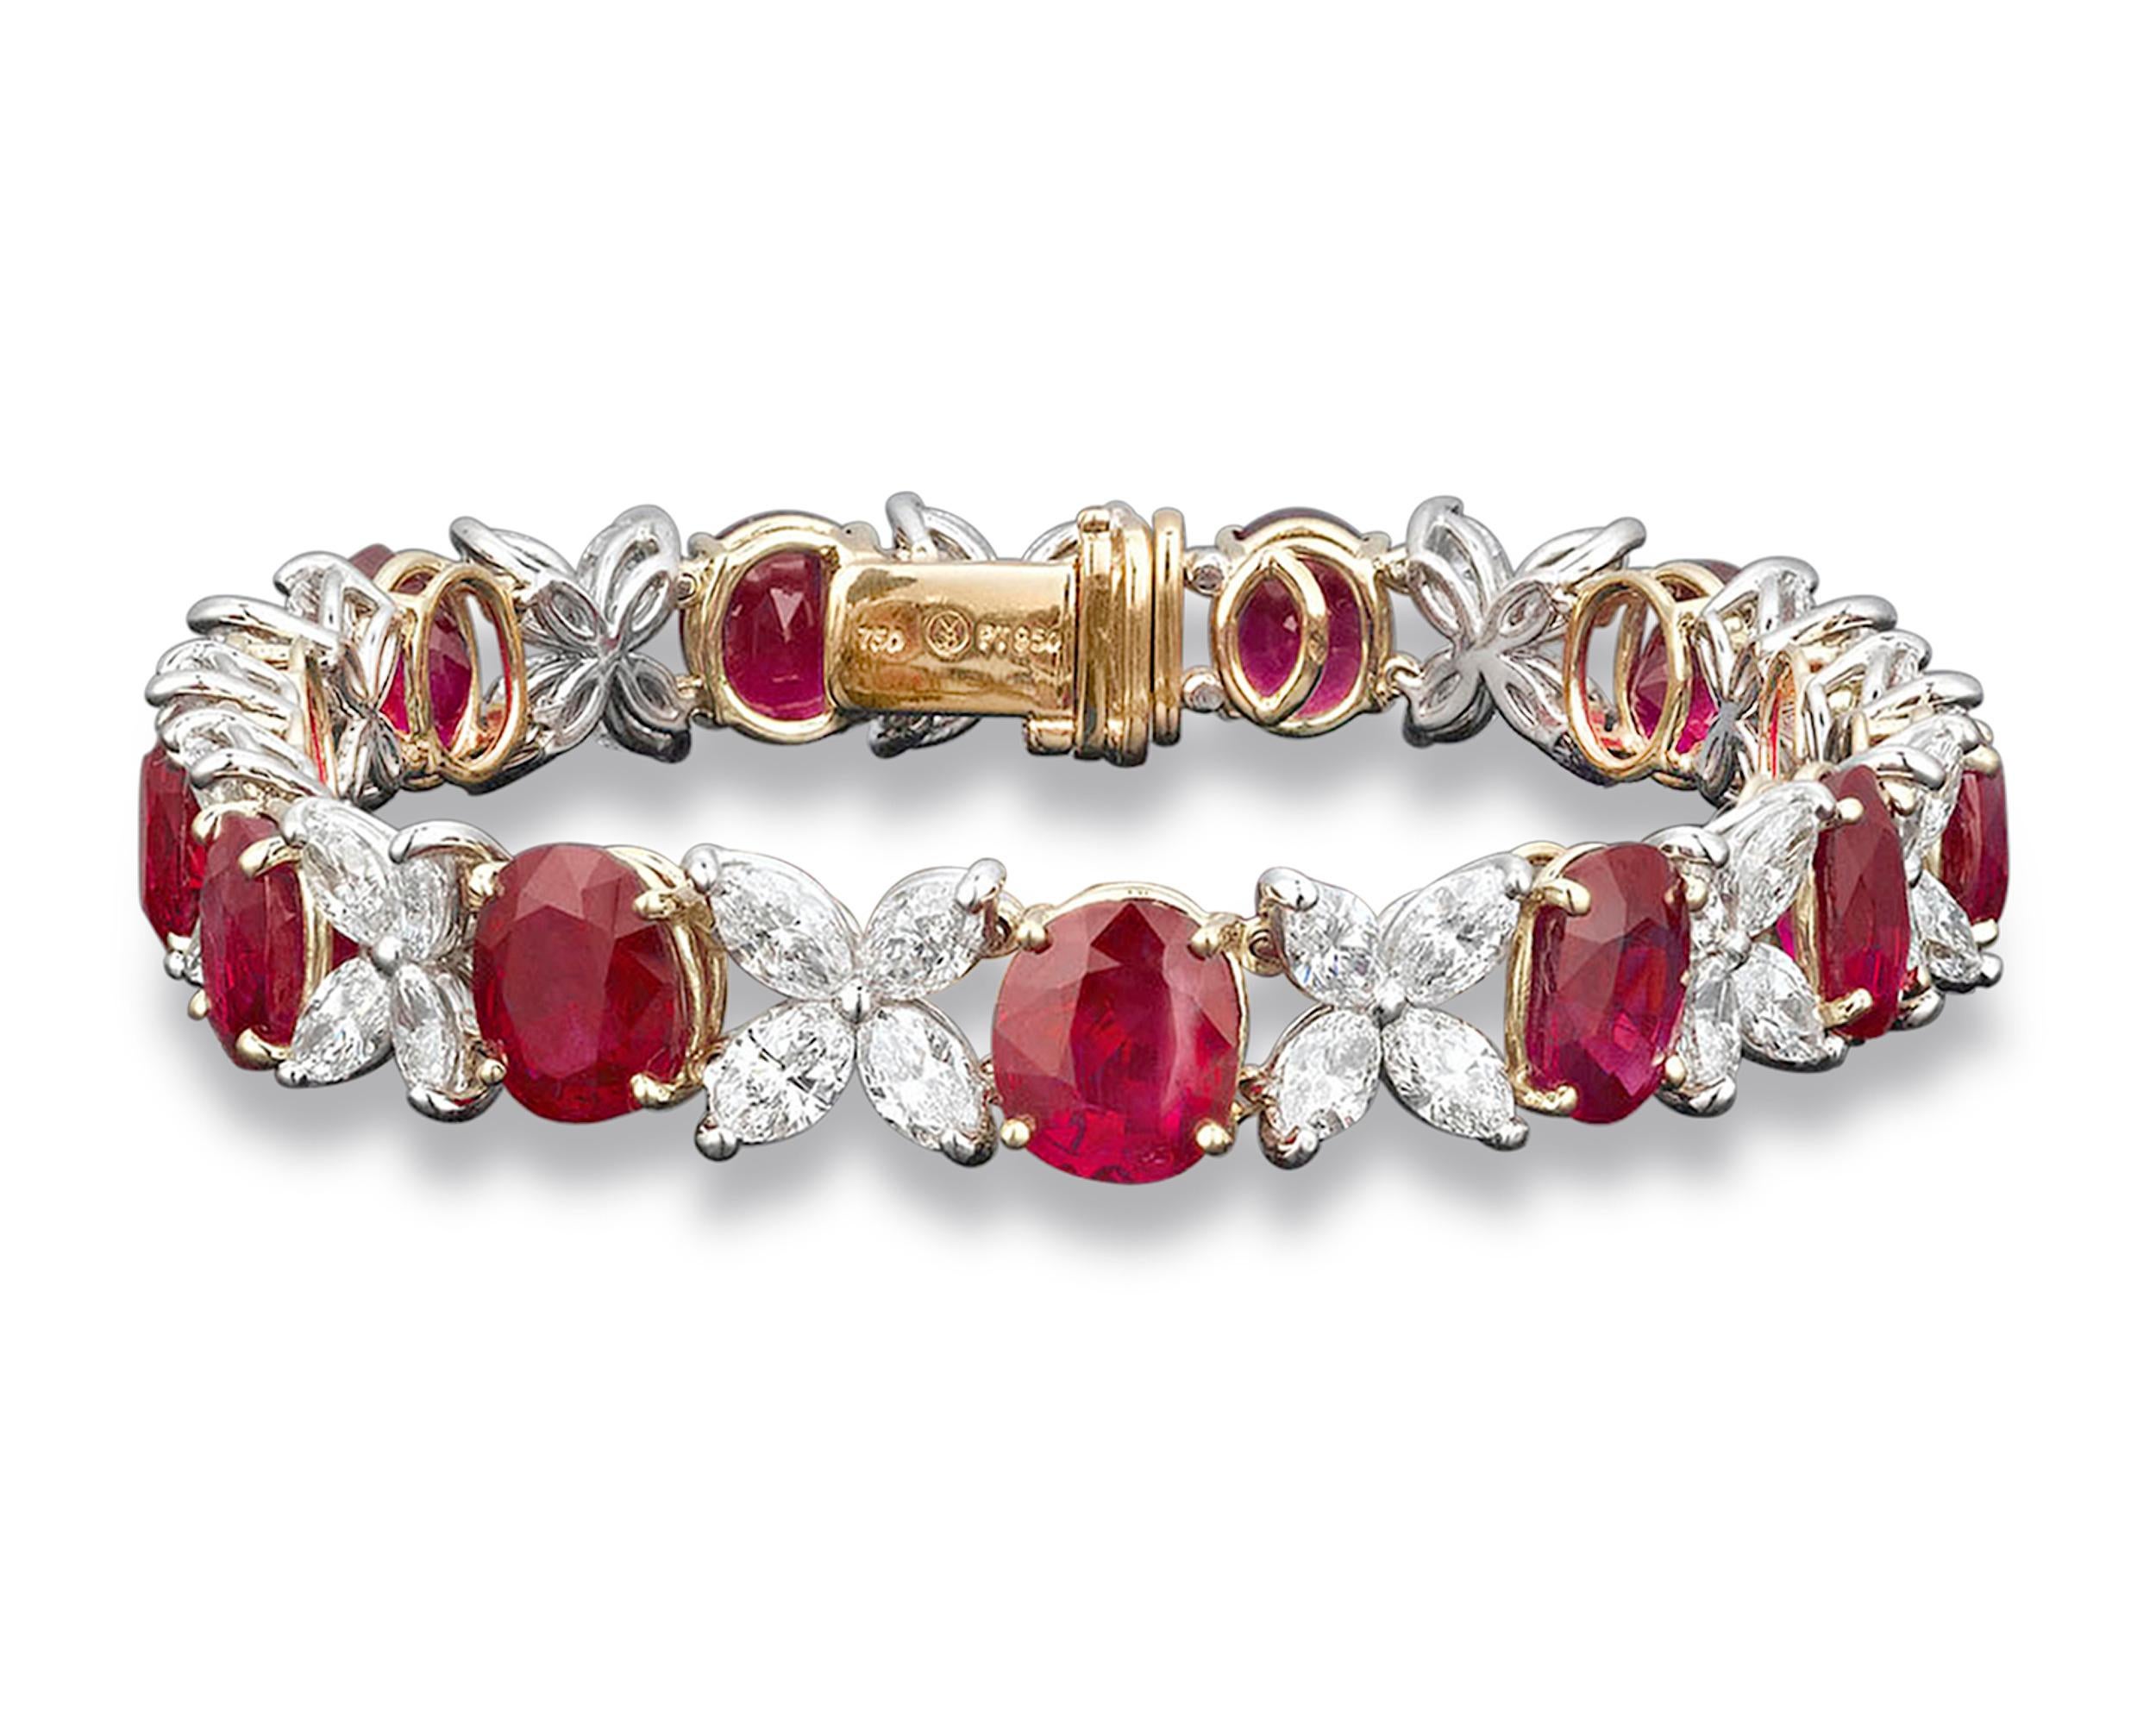 Brilliant Cut Untreated Burma Ruby And Diamond Bracelet, 21.16 Carats For Sale